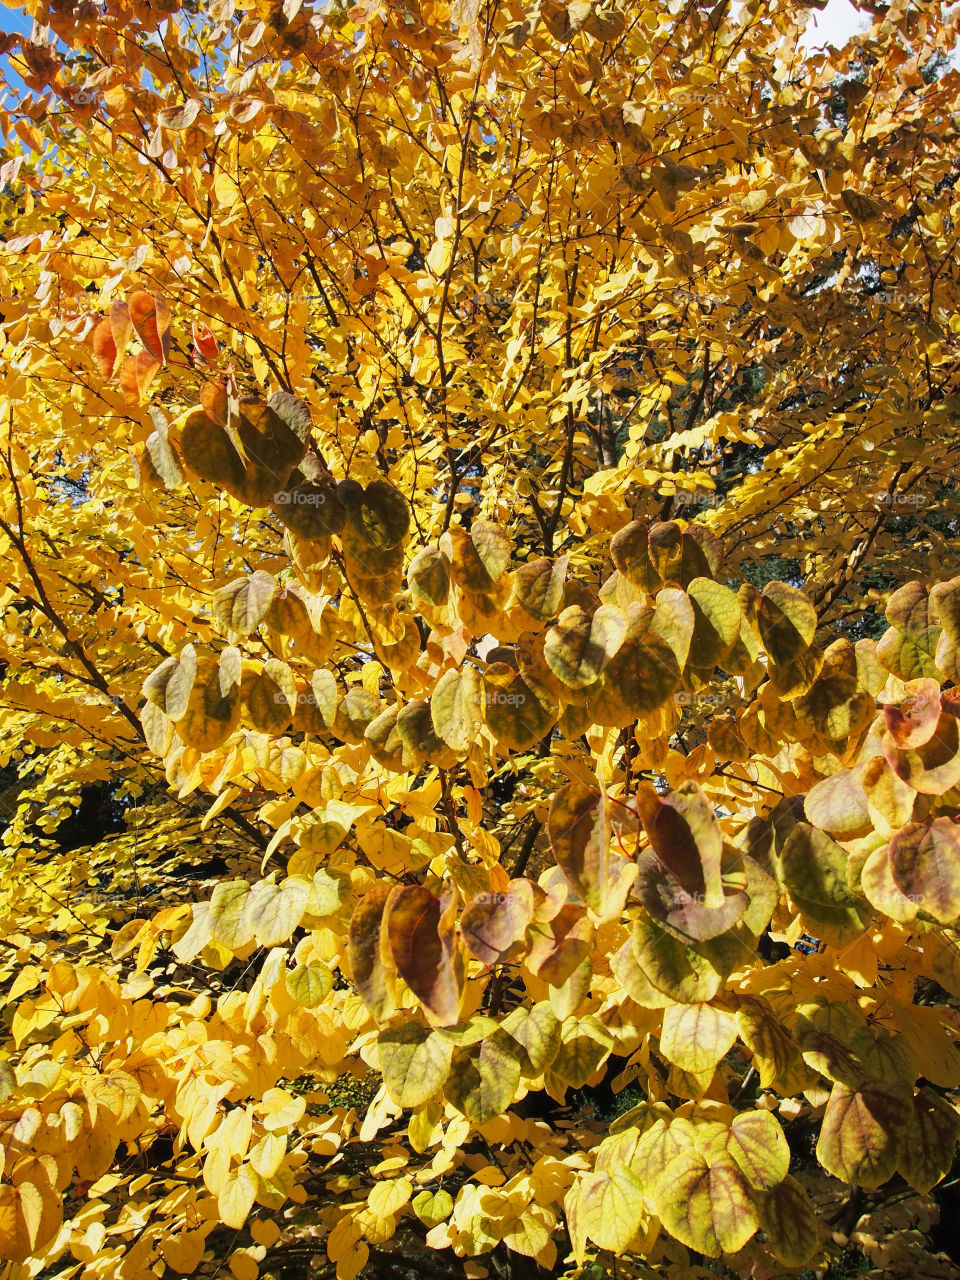 yellow orange leaf golden by ptrendy